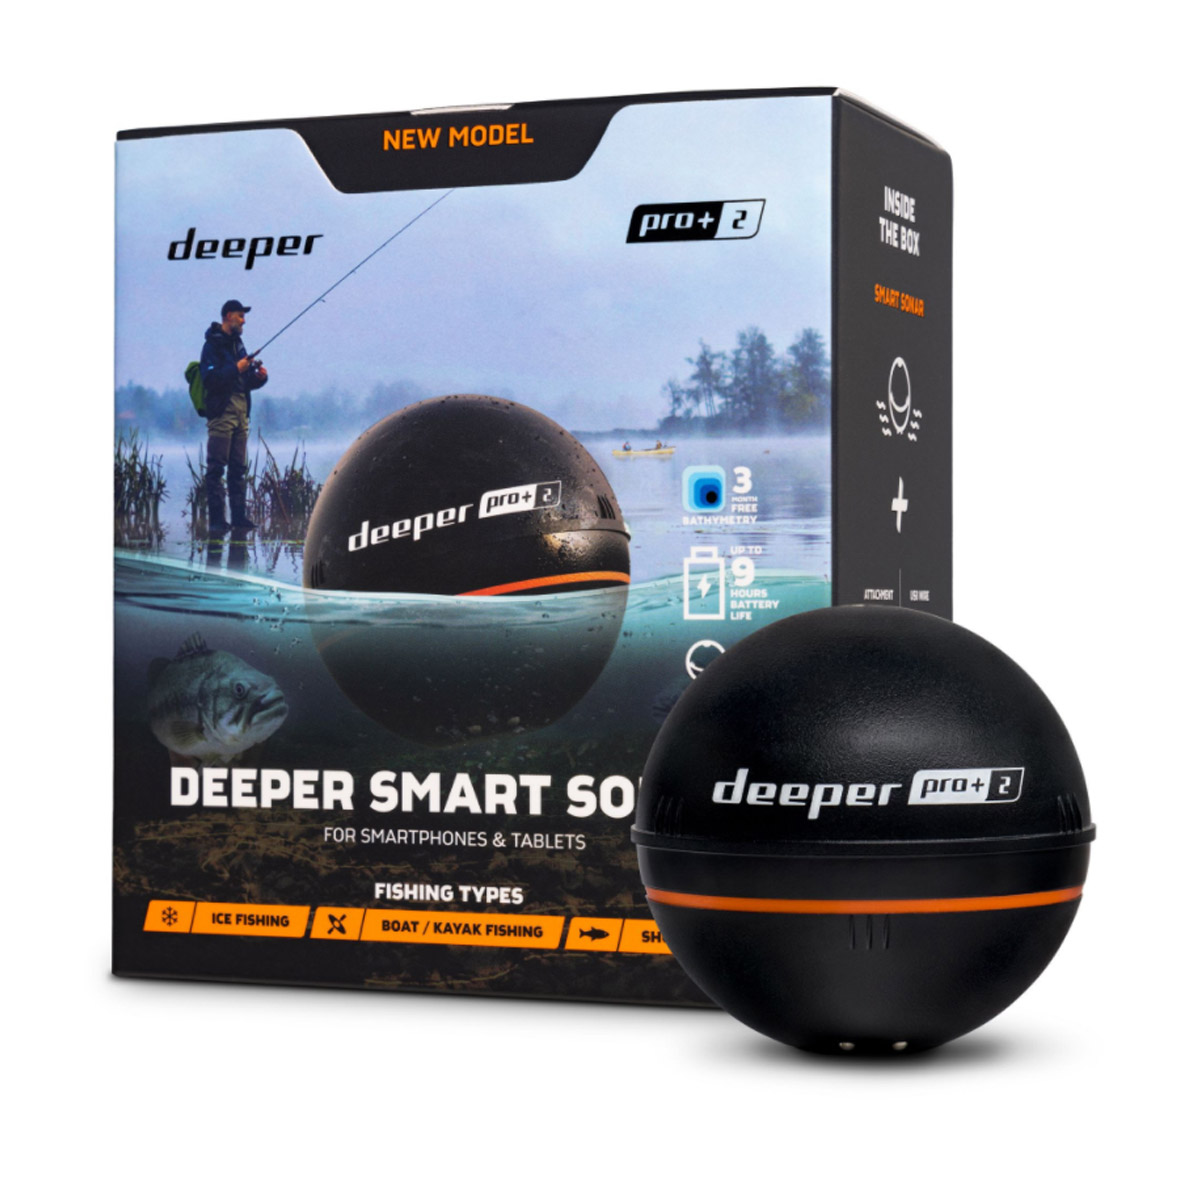 Deeper Fishfinder Pro +2